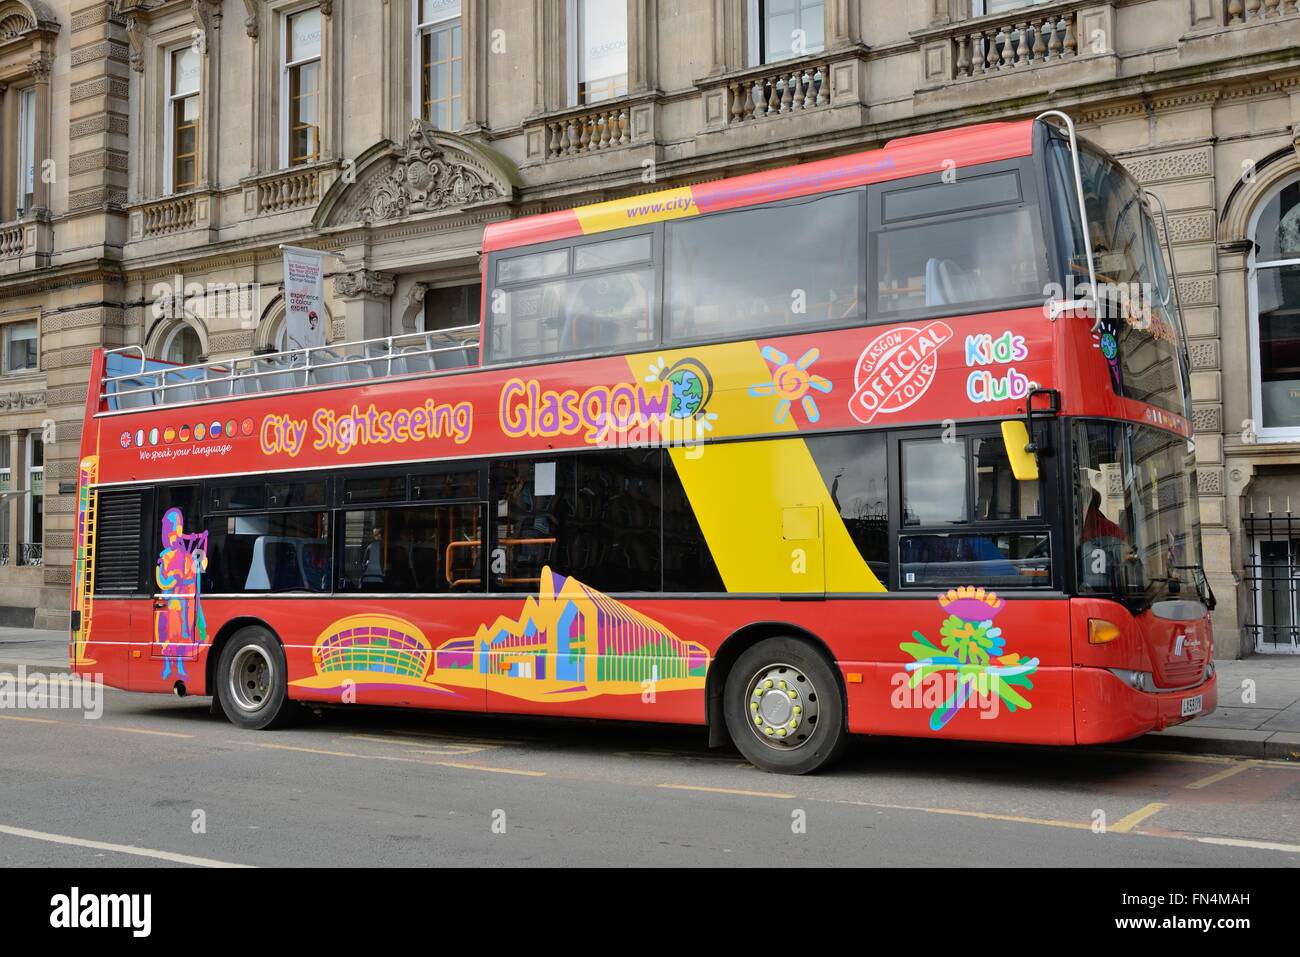 Glasgow city sightseeing tour bus in George Square, Glasgow, Scotland, UK Stock Photo